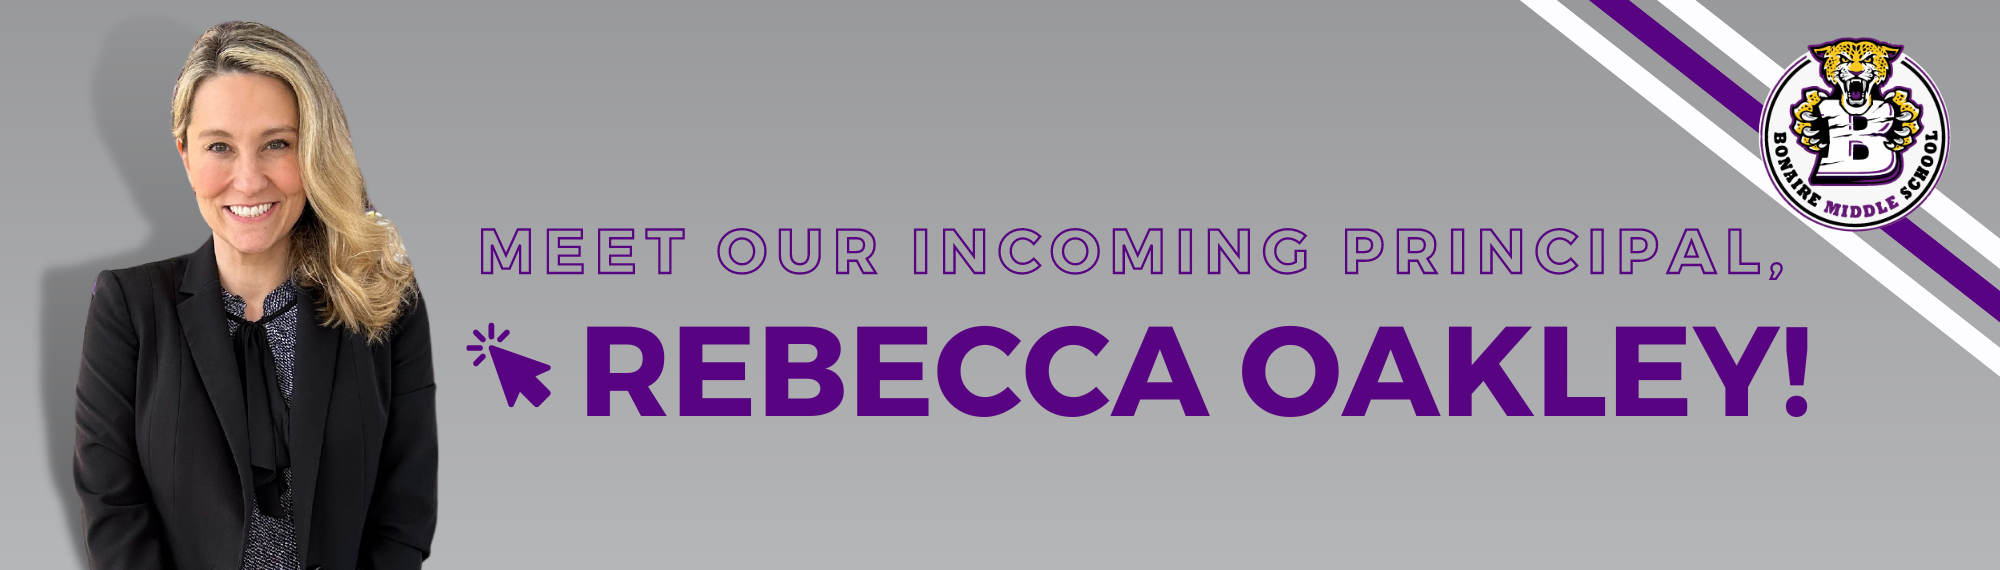 Meet Our Incoming Principal, Rebecca Oakley